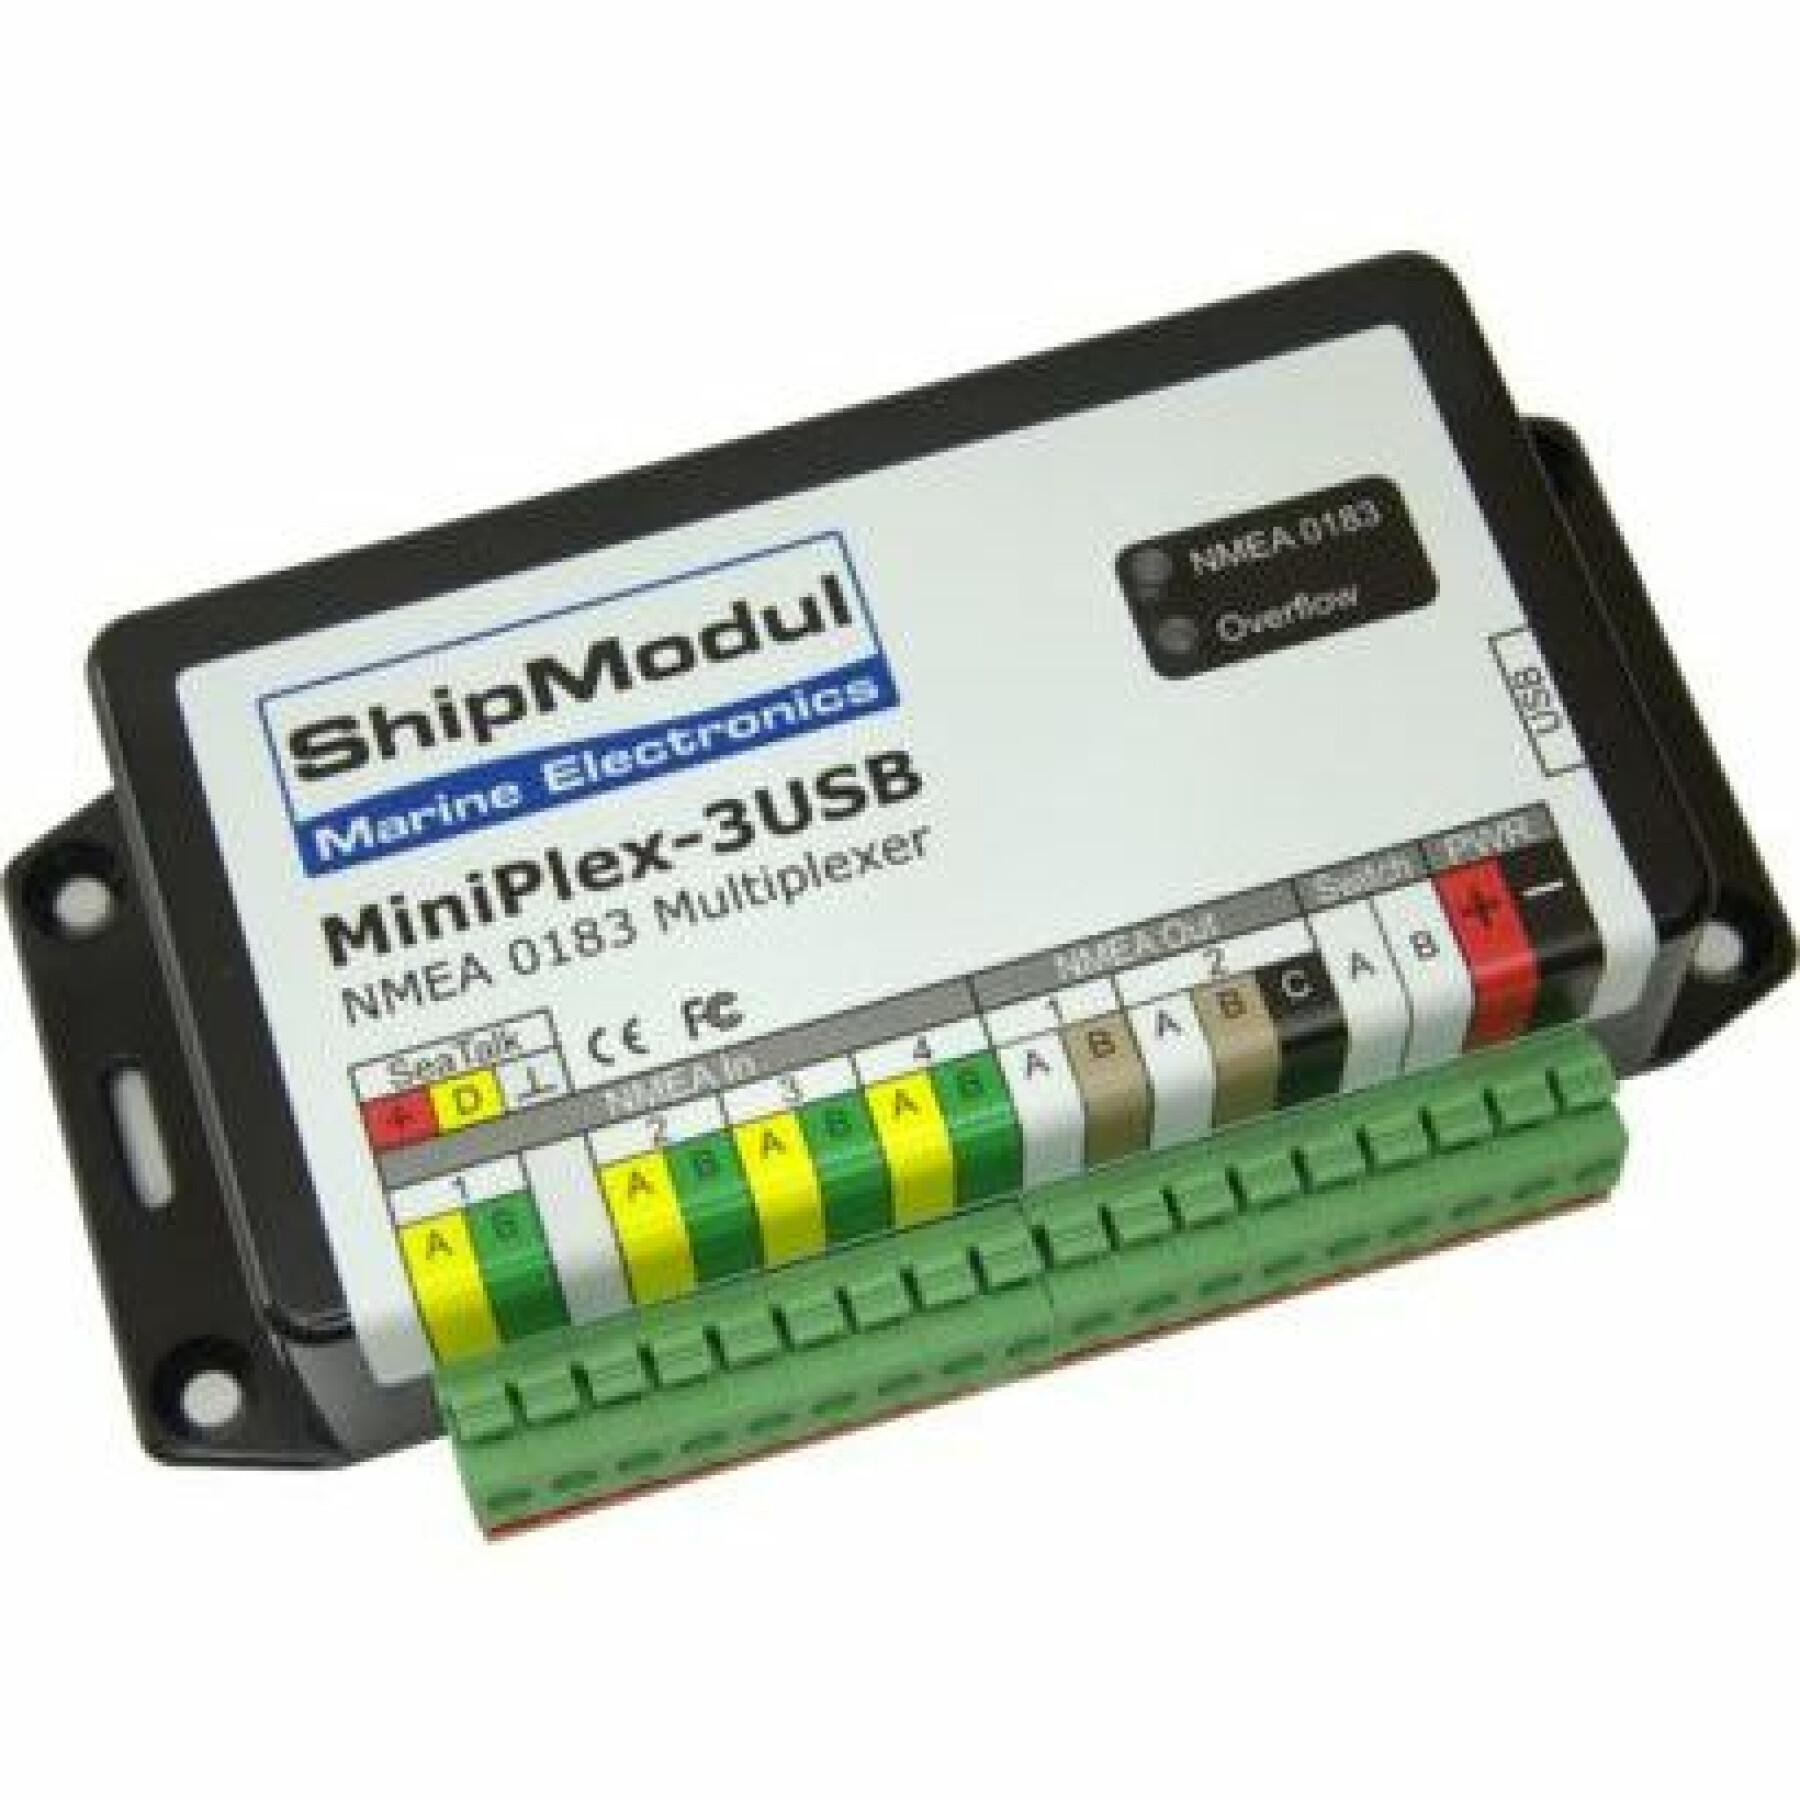 Multiplexeur version USB ShipModul Miniplex-3USB